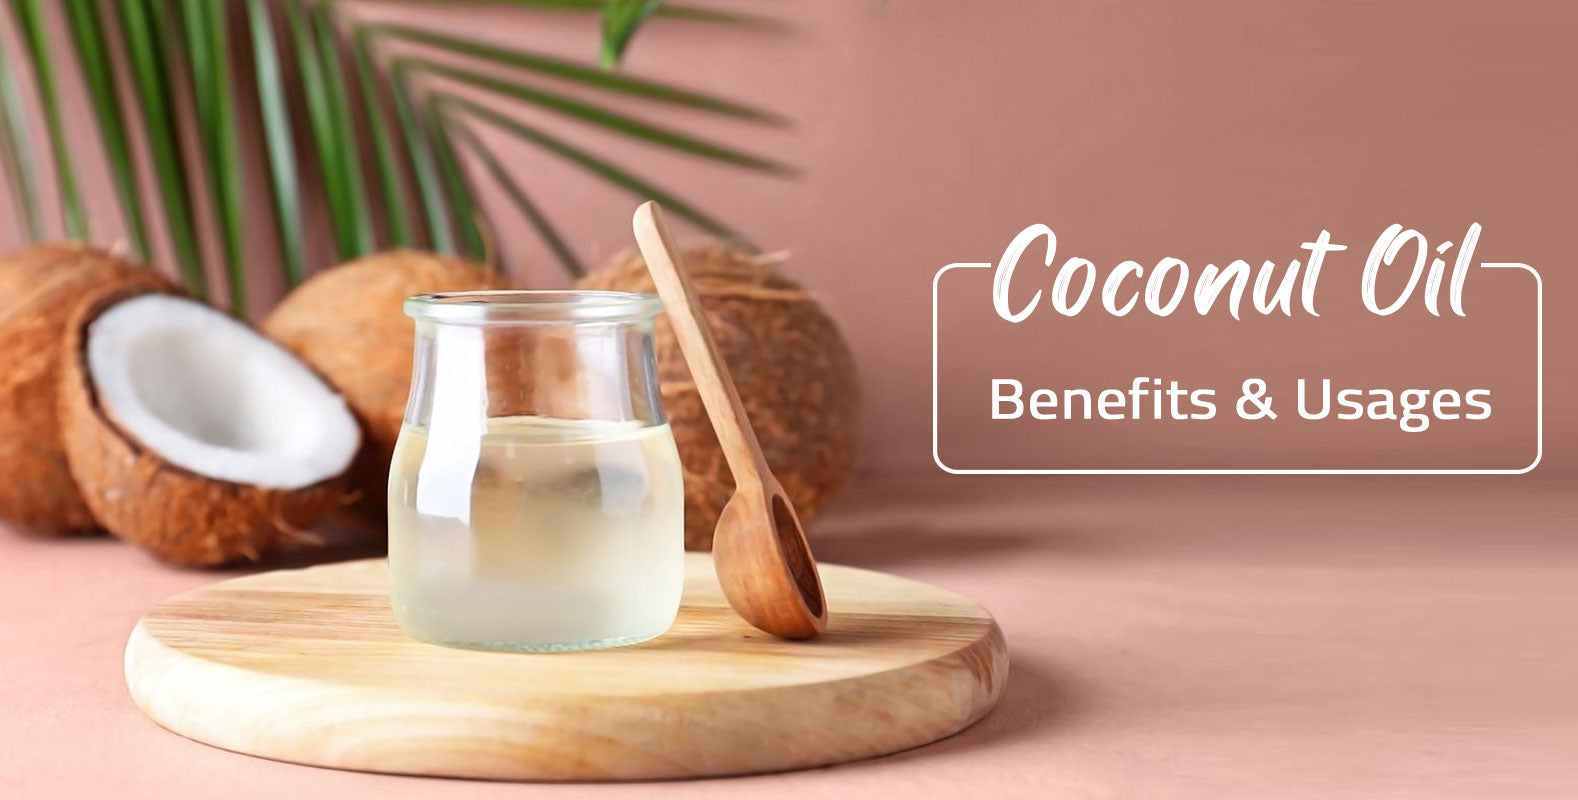 Coconut Oil benefits & usages